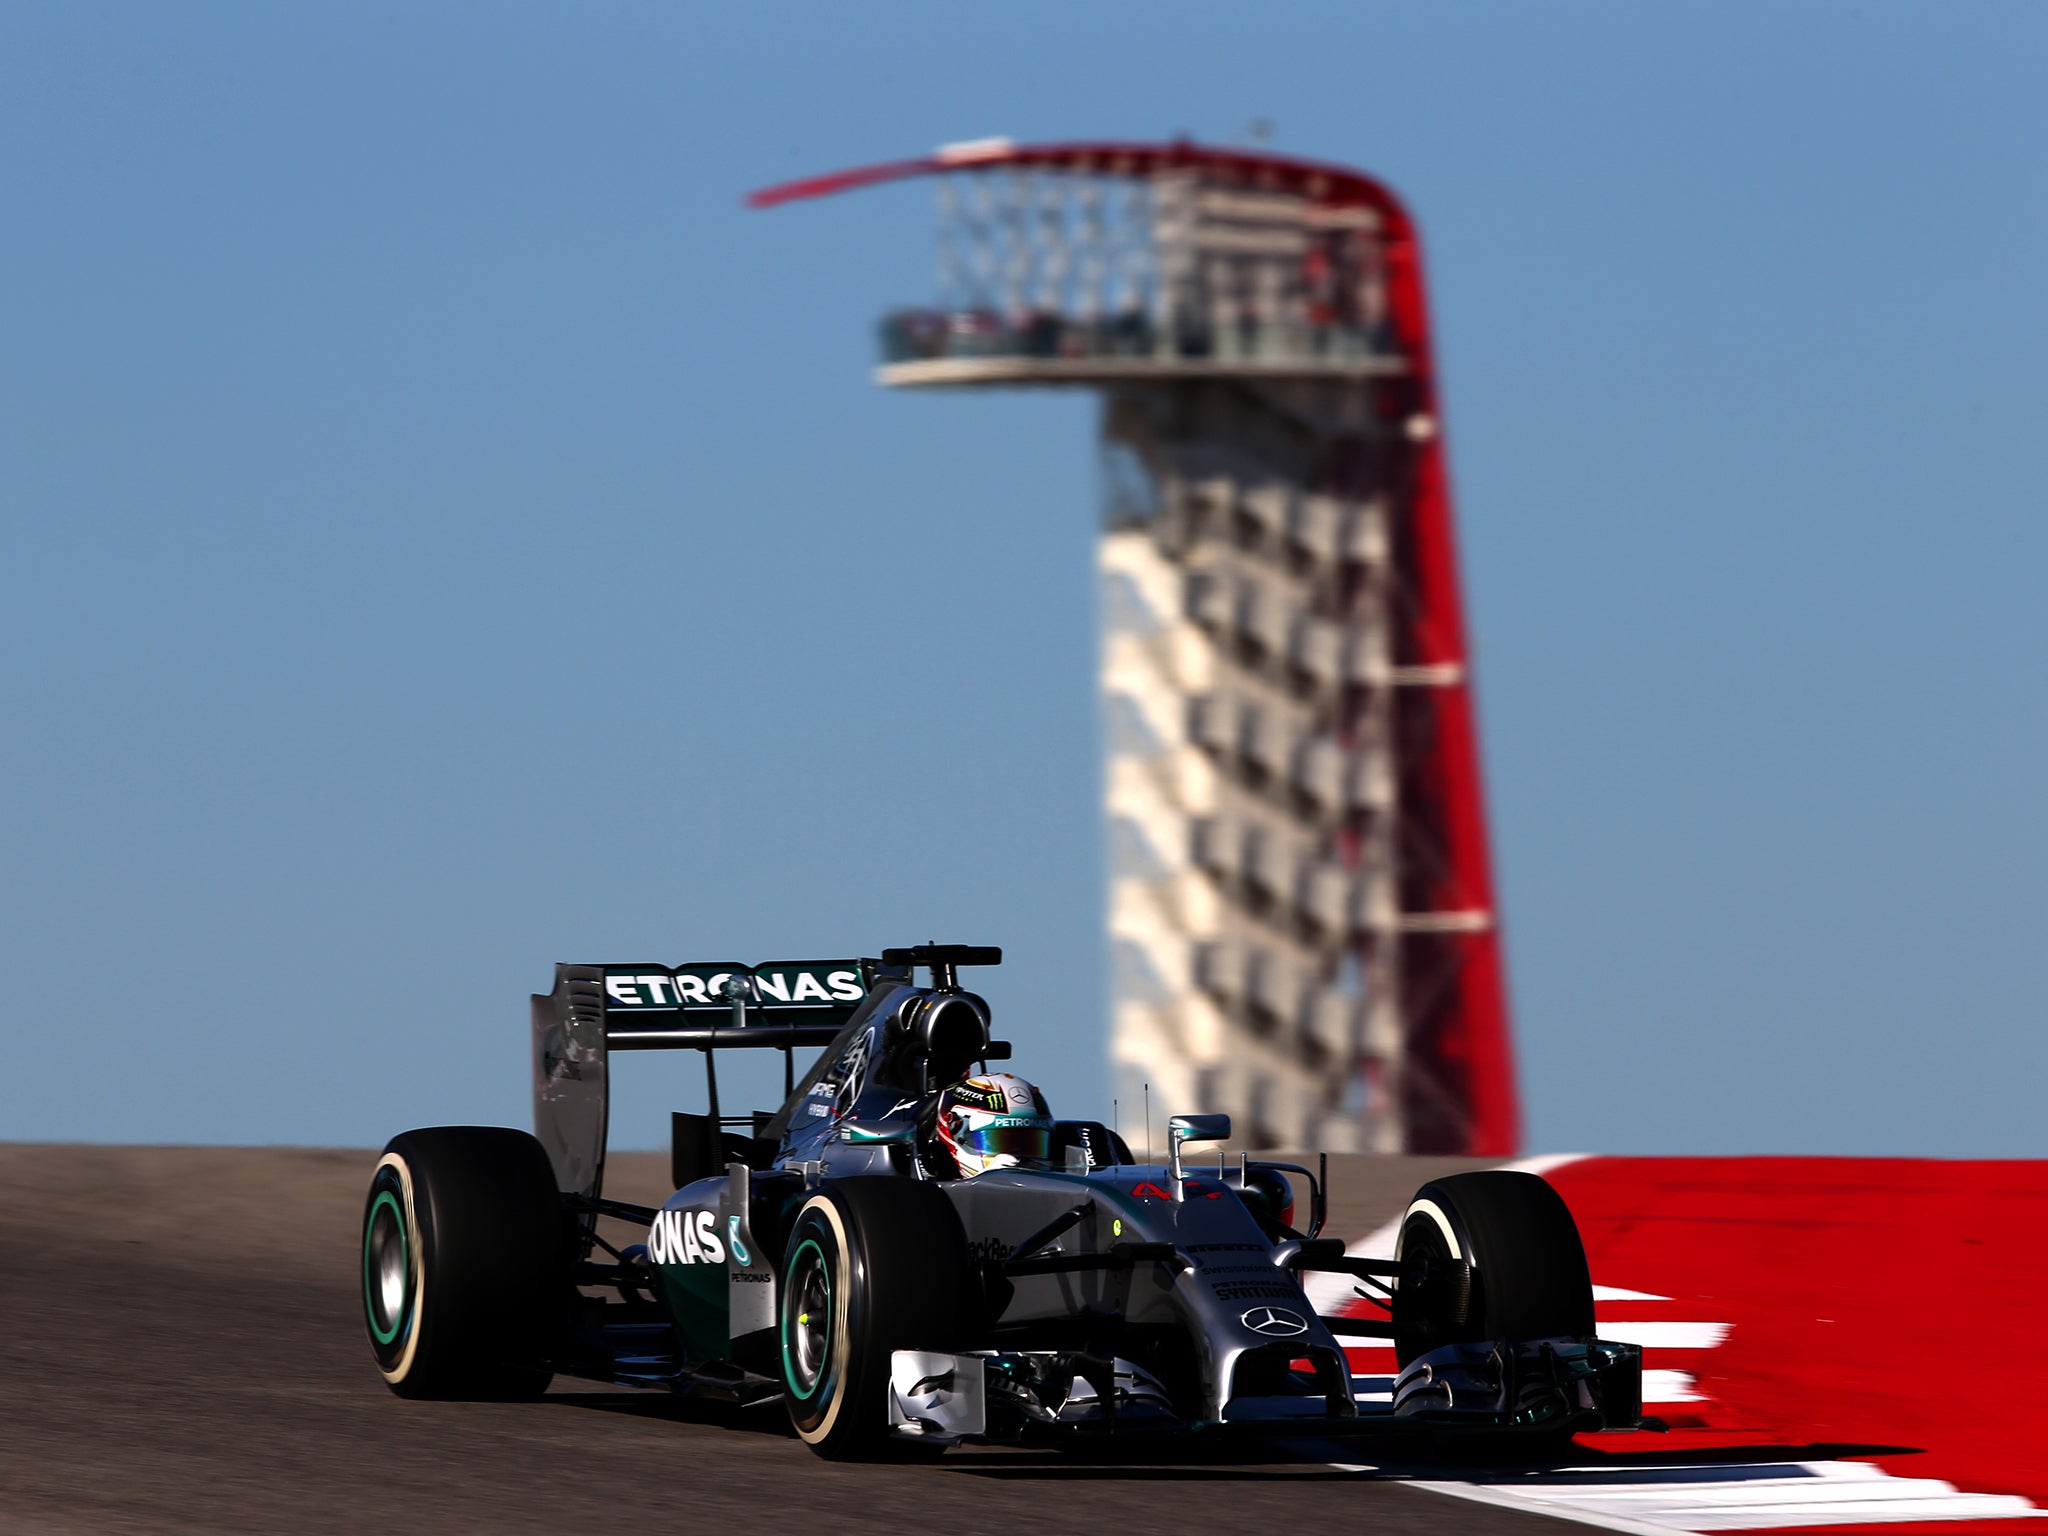 Lewis Hamilton during practice for the US Grand Prix